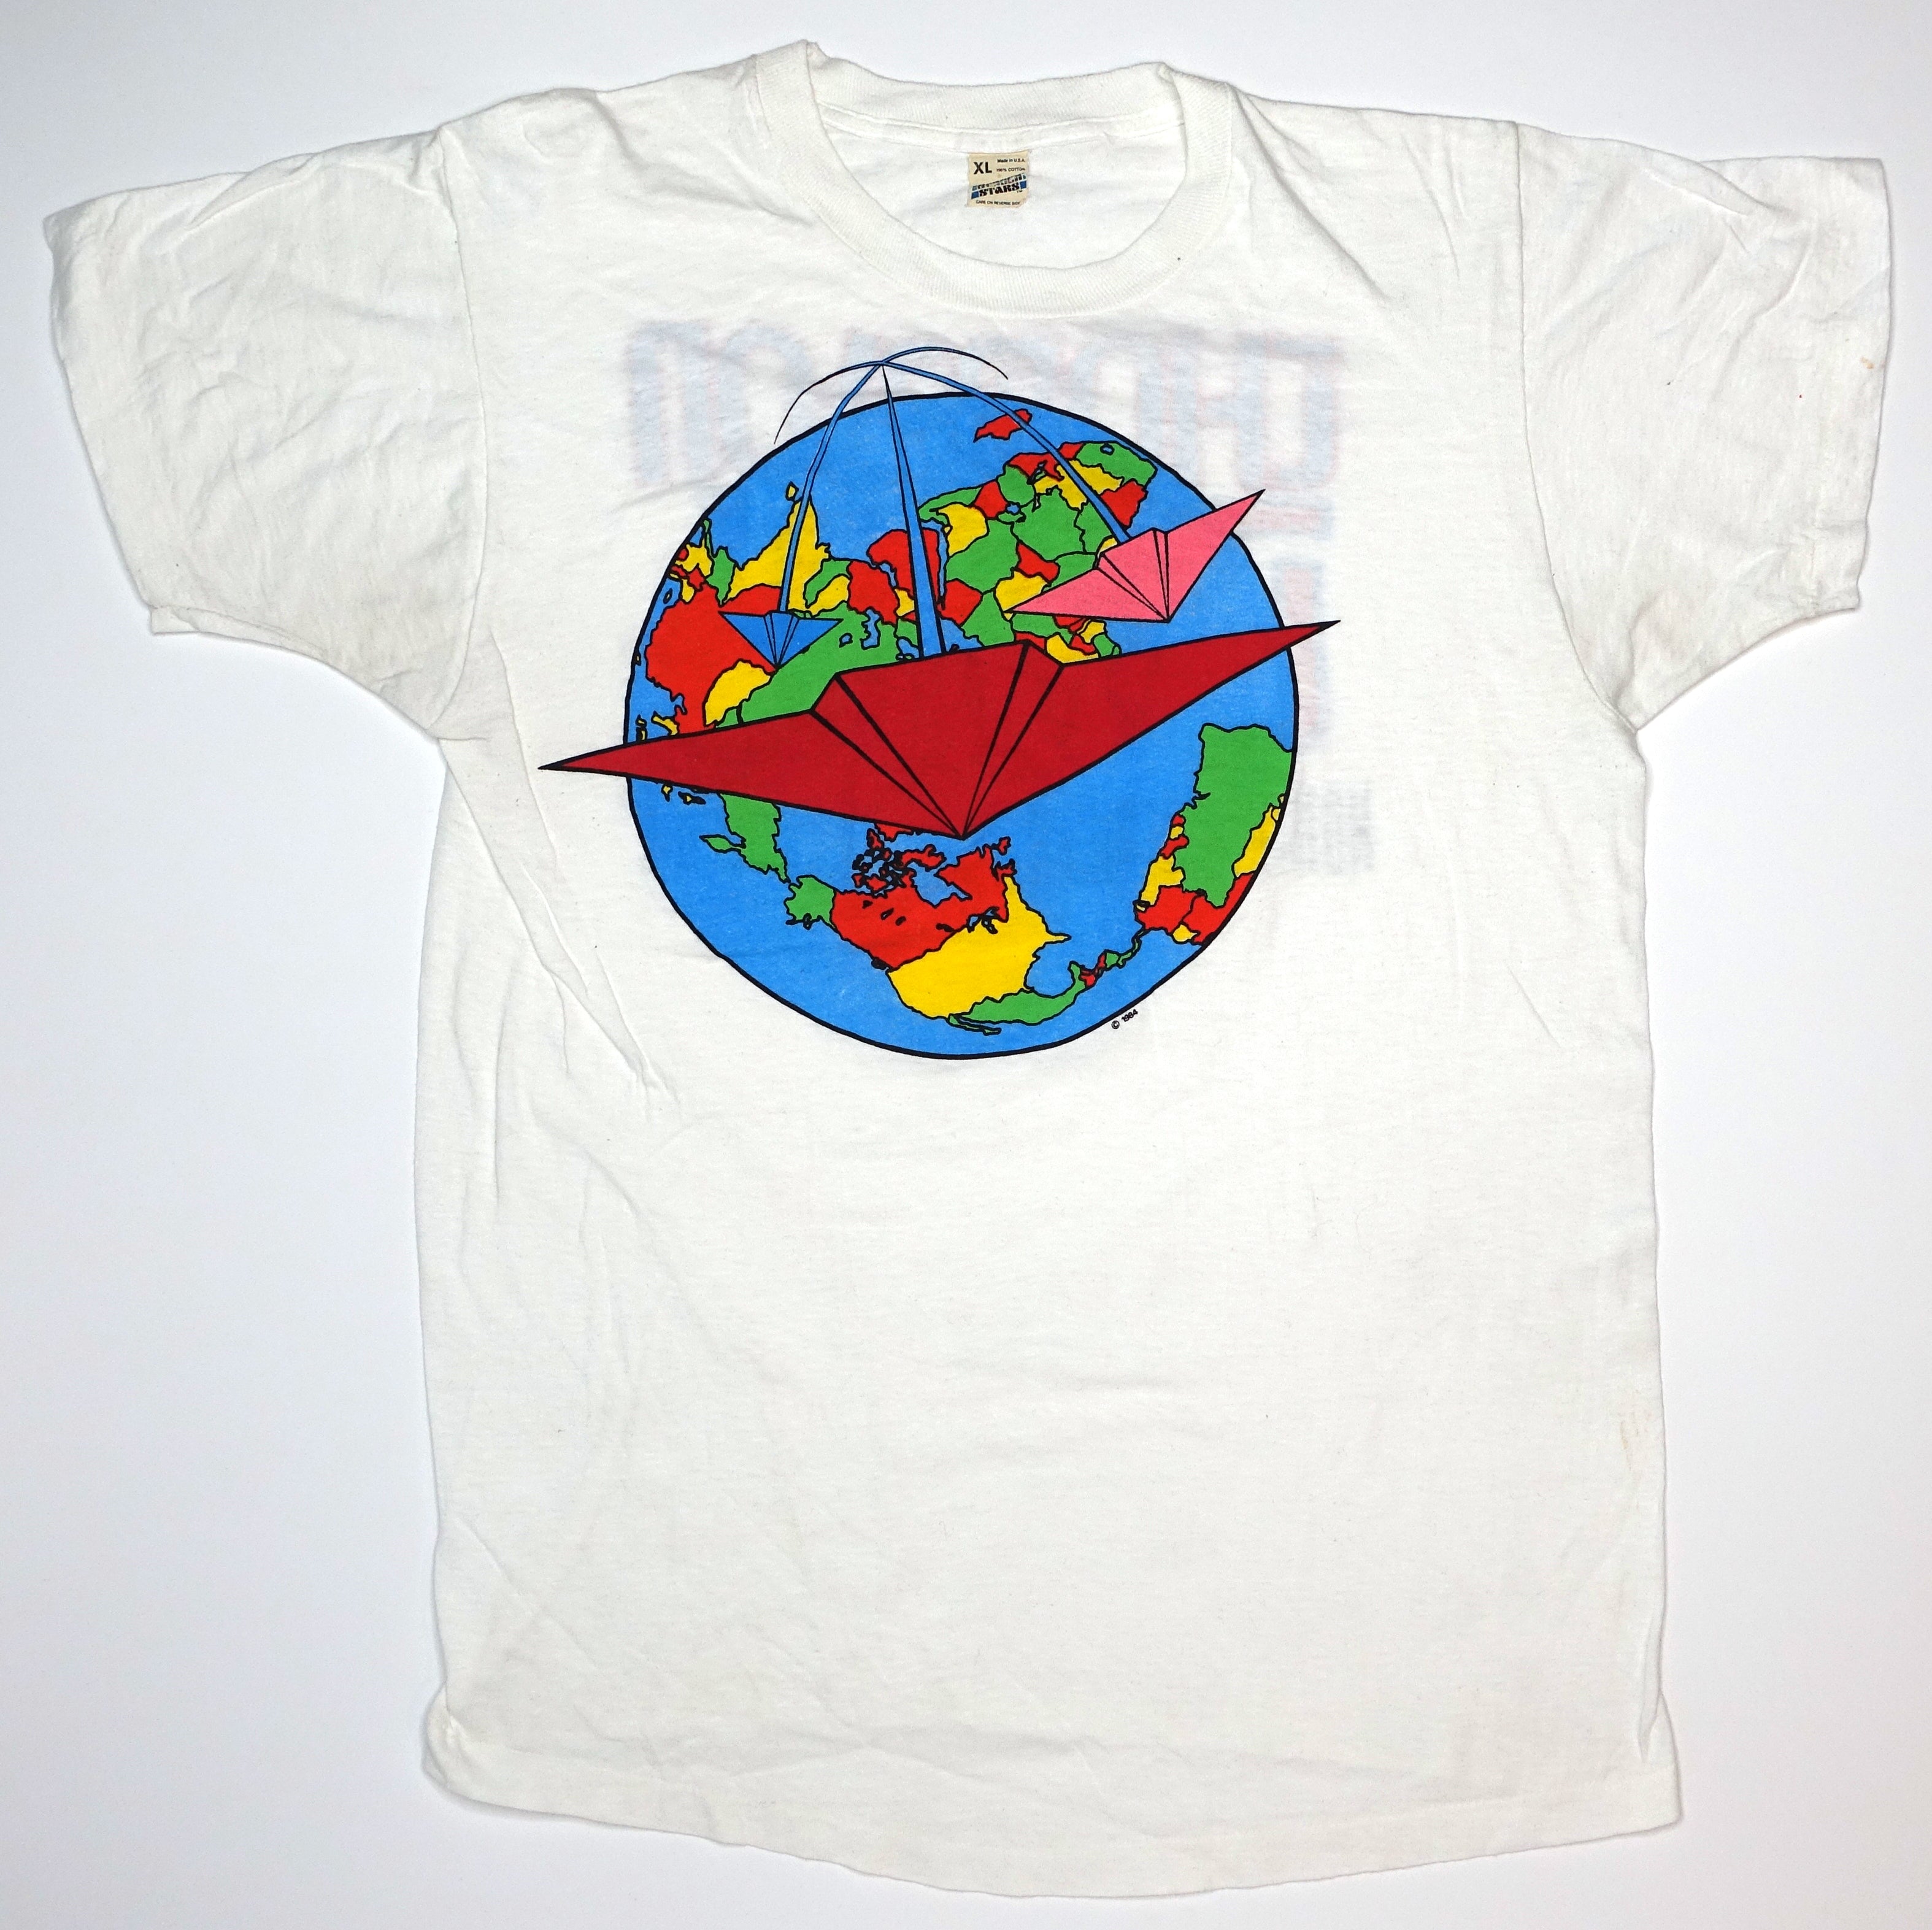 Thompson Twins - North American Summer 1984 Tour Shirt Size XL